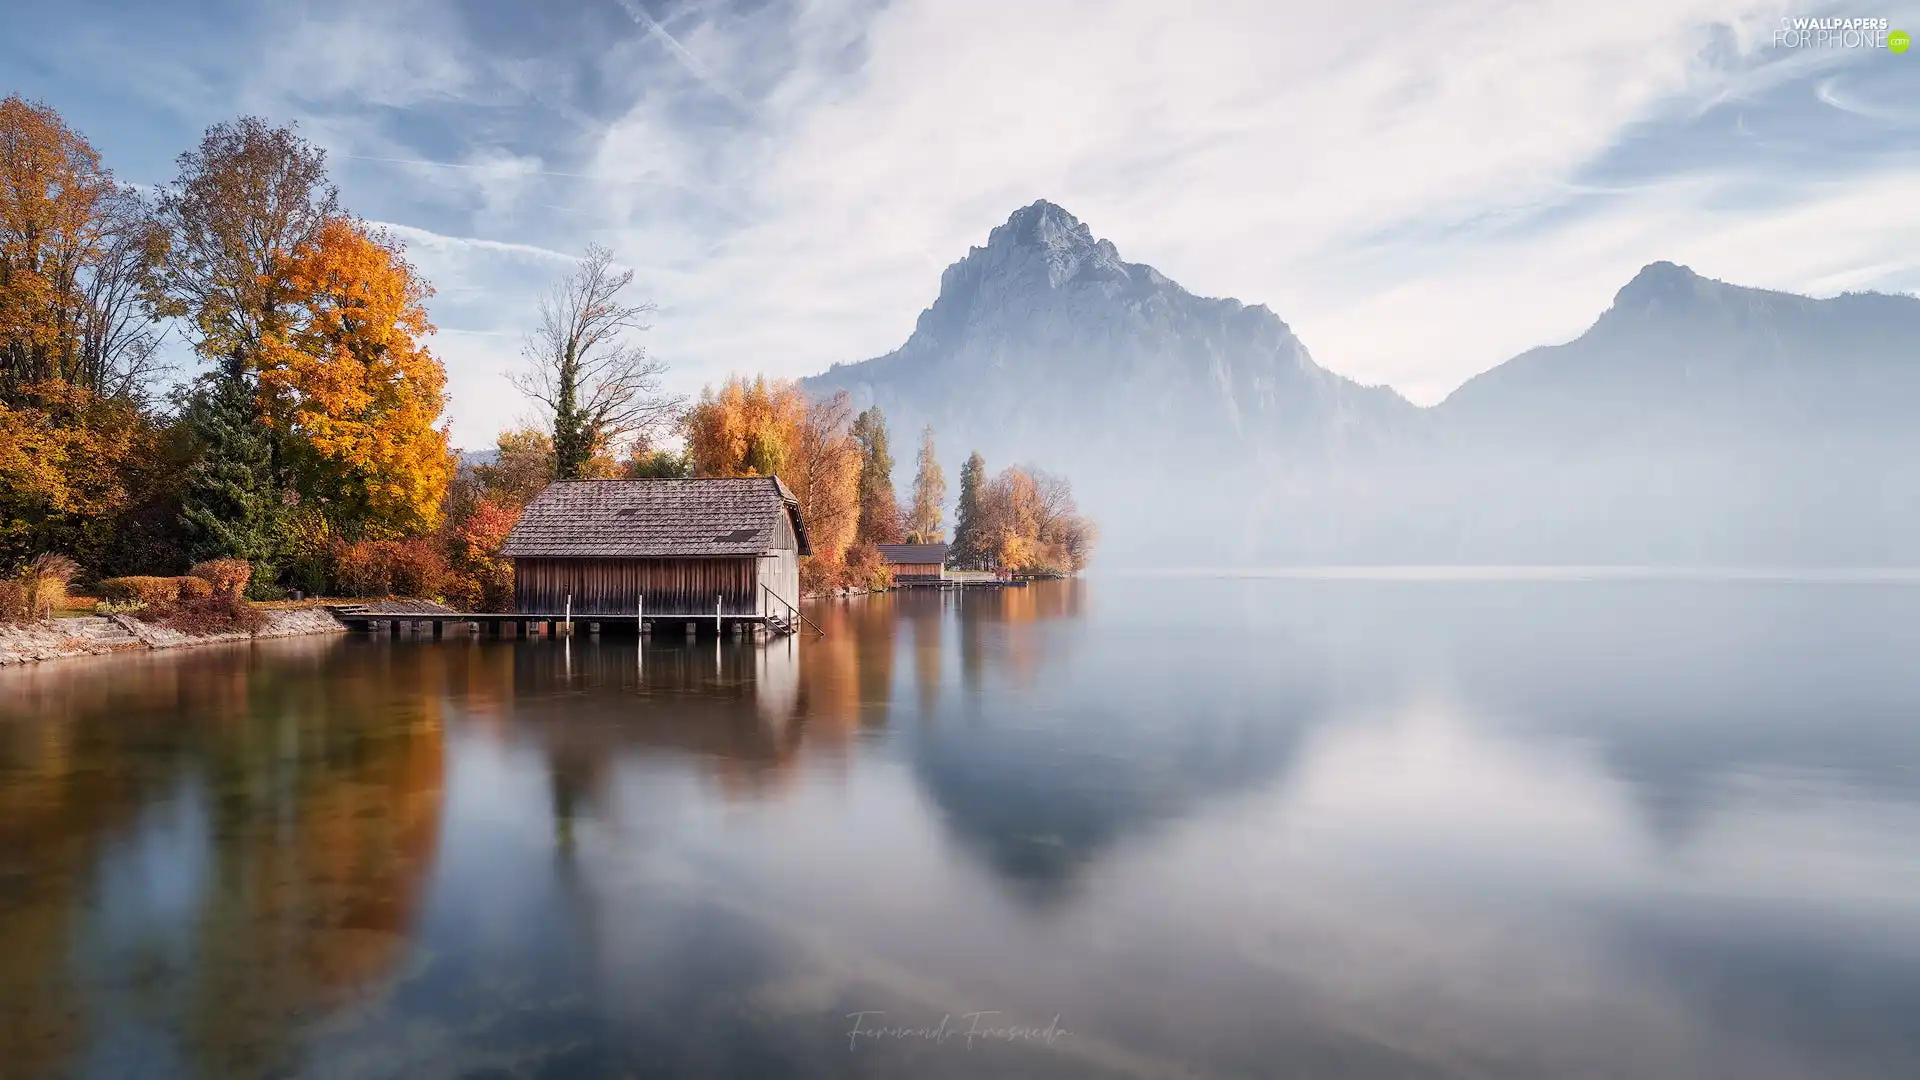 Fog, Lake Traunsee, Mountains, Houses, autumn, Austria, trees, viewes, Yellowed